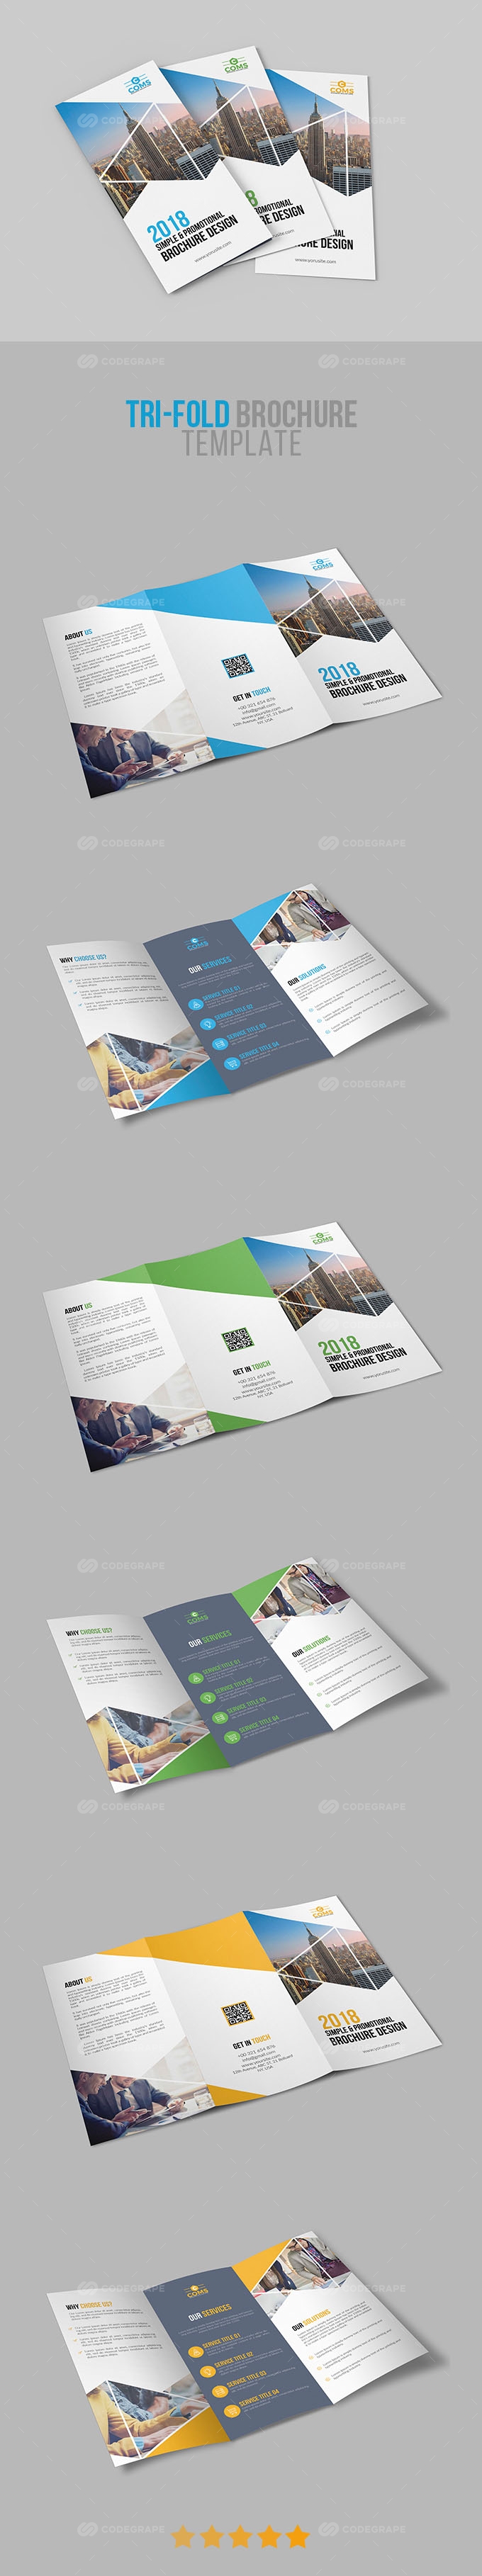 Corporate Tri-Fold Brochure Template 02